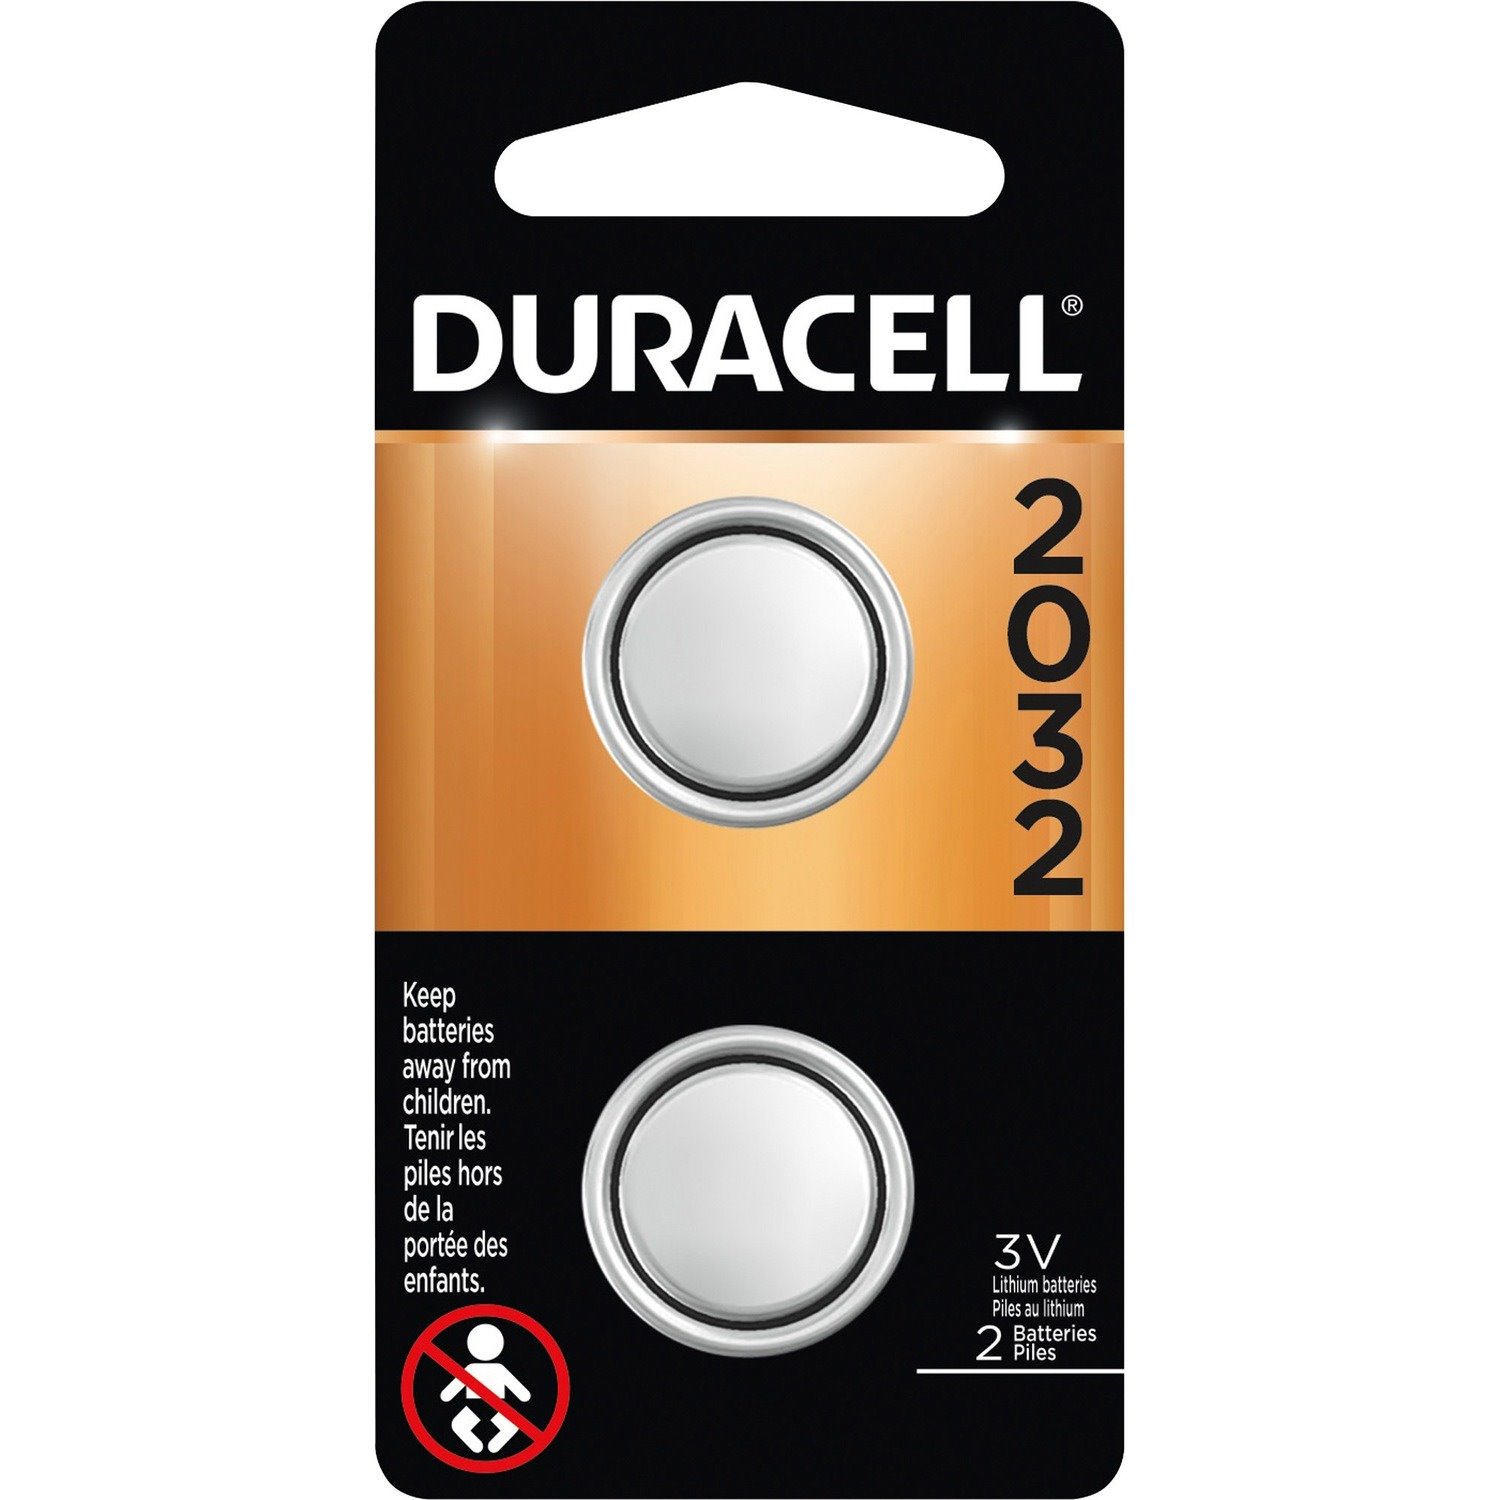 Duracell Battery - Lithium (Li)